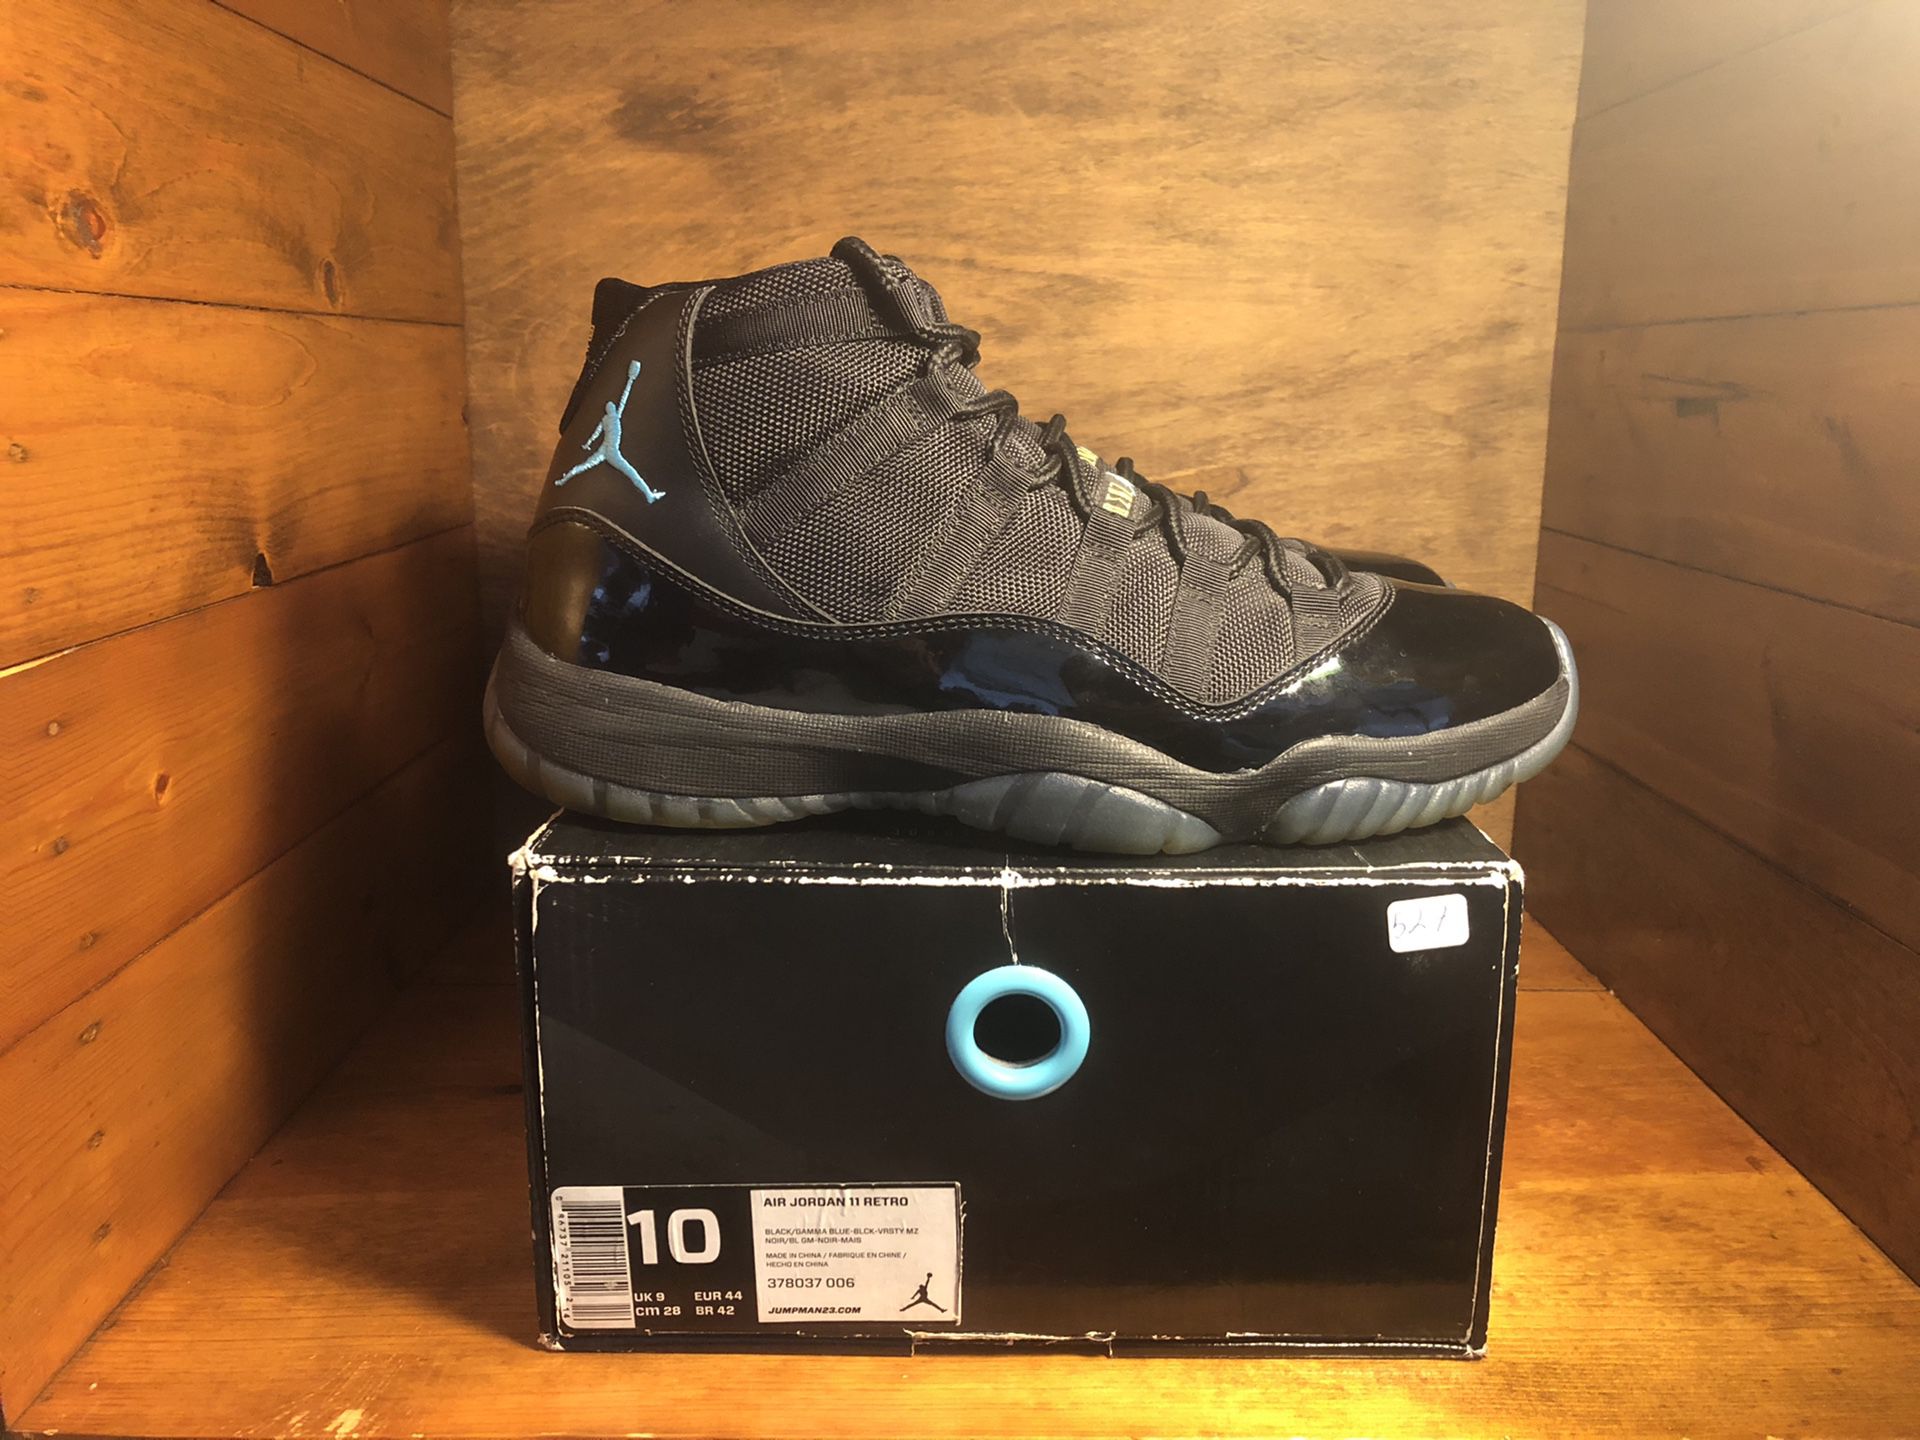 Nike Air Jordan 11 Retro “Gamma Blue” size 10 with box 9.5/10